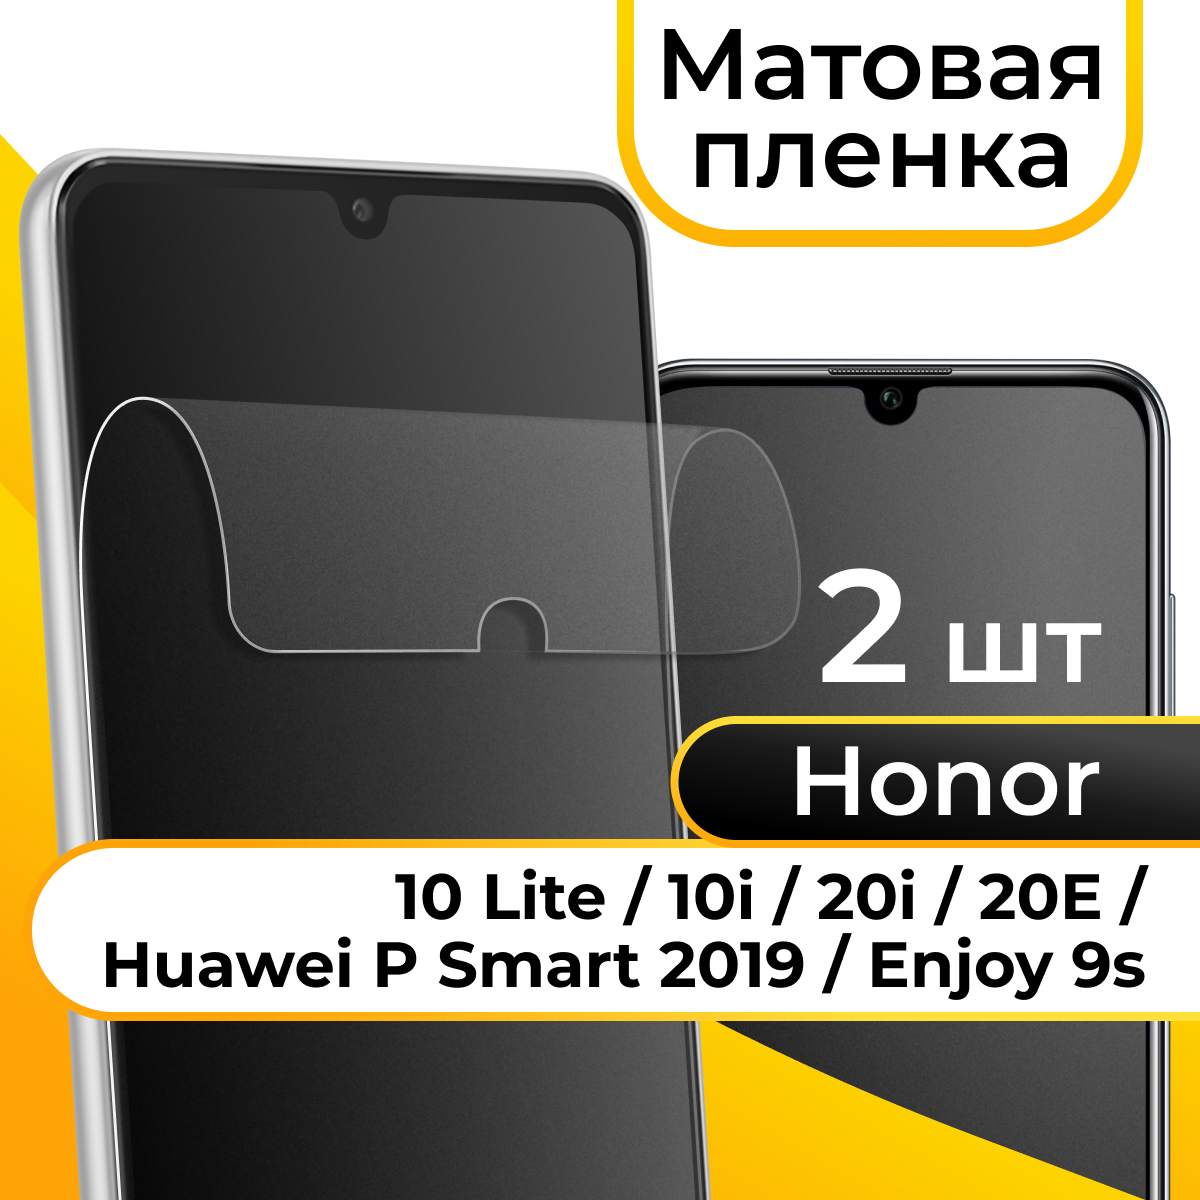 Матовая пленка для Honor 10 Lite 10i 20i 20E Huawei P Smart 2019 и Enjoy 9s / Хонор 10 Лайт 10 ай 20 ай 20Е Хуавей П Смарт 2019 и Энджой 9с